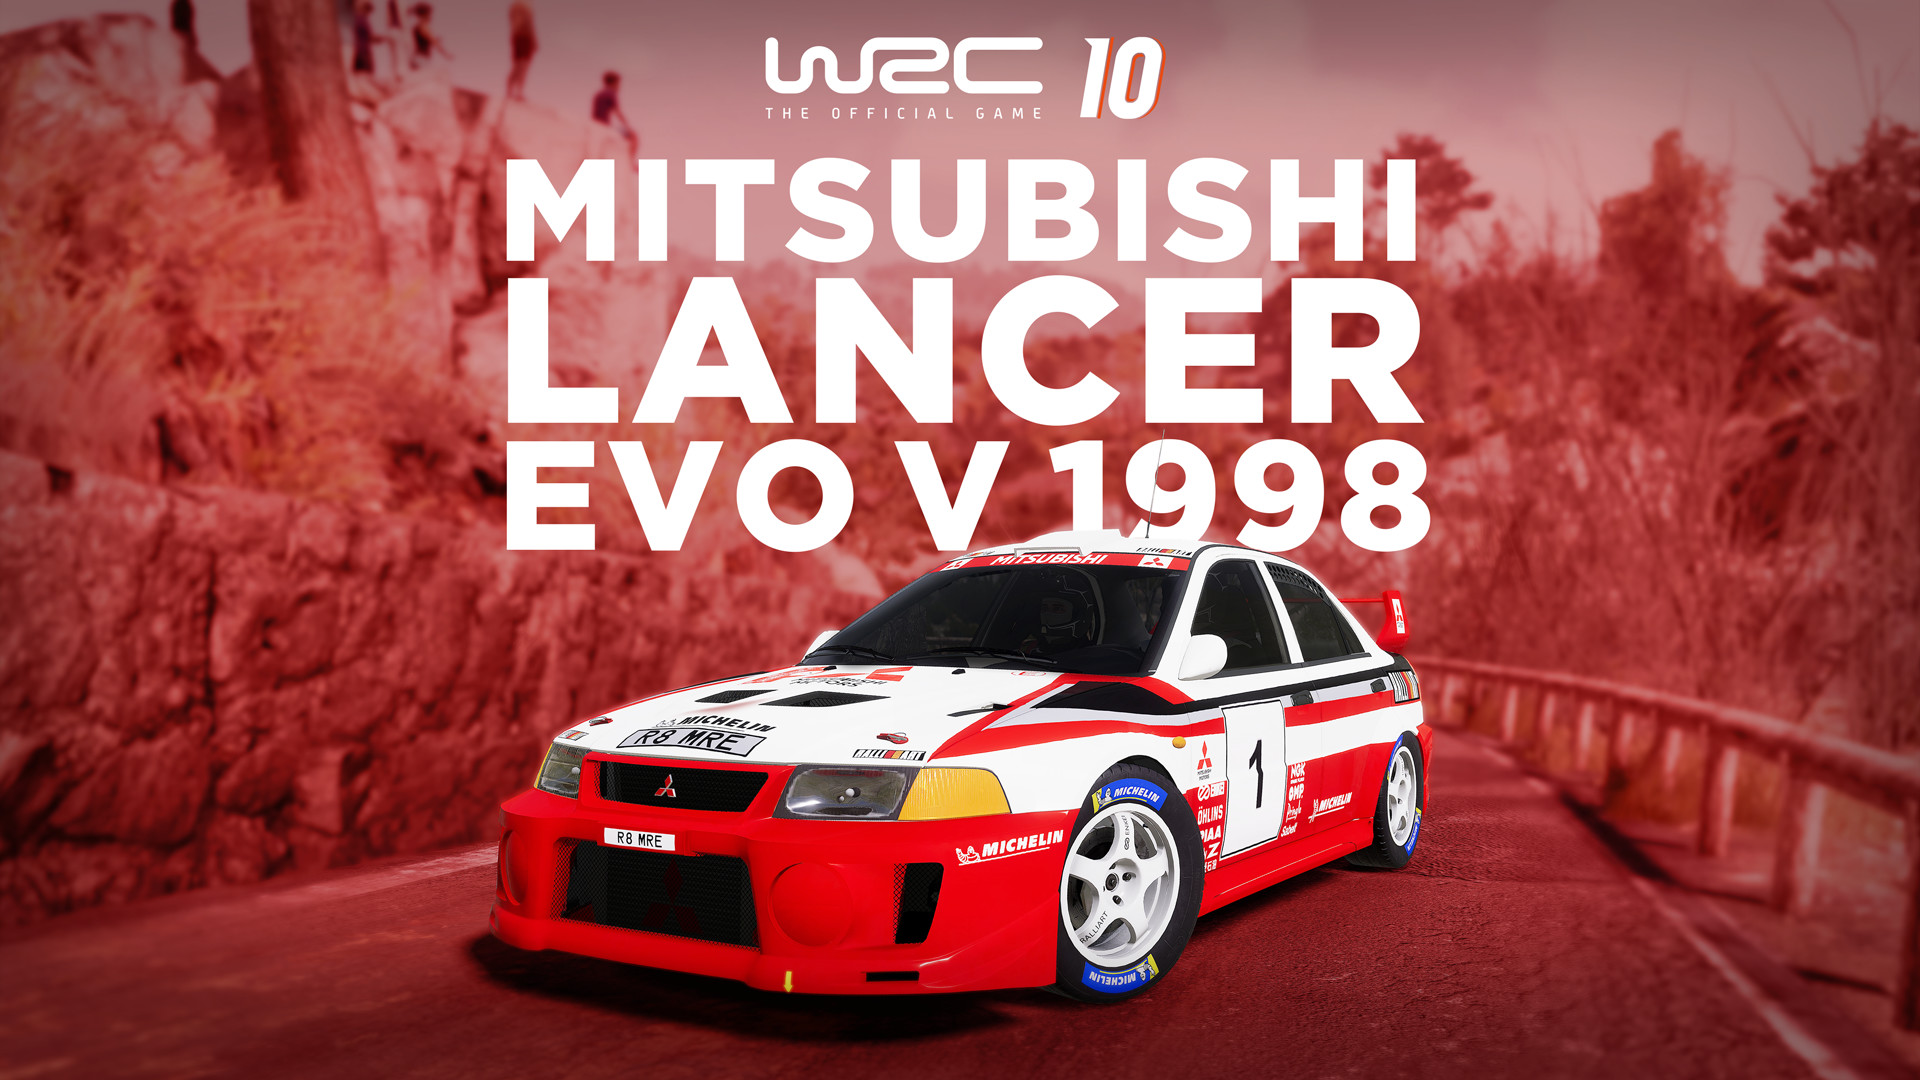 WRC 10 - Mitsubishi Lancer Evo V 1998 DLC Steam CD Key (2.69$)